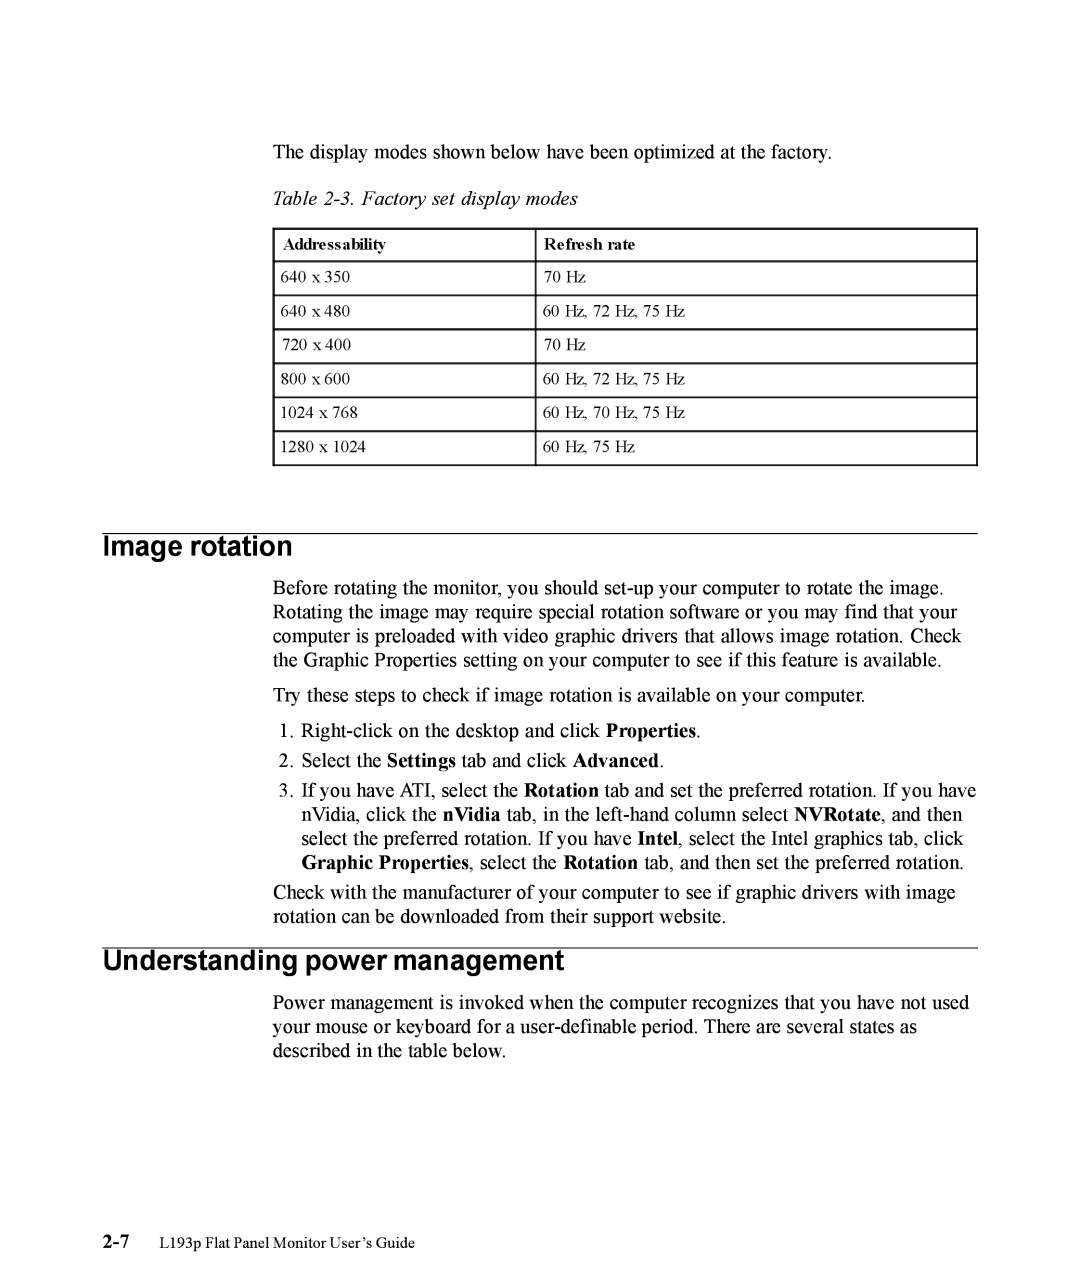 Lenovo L193p manual Image rotation, Understanding power management 